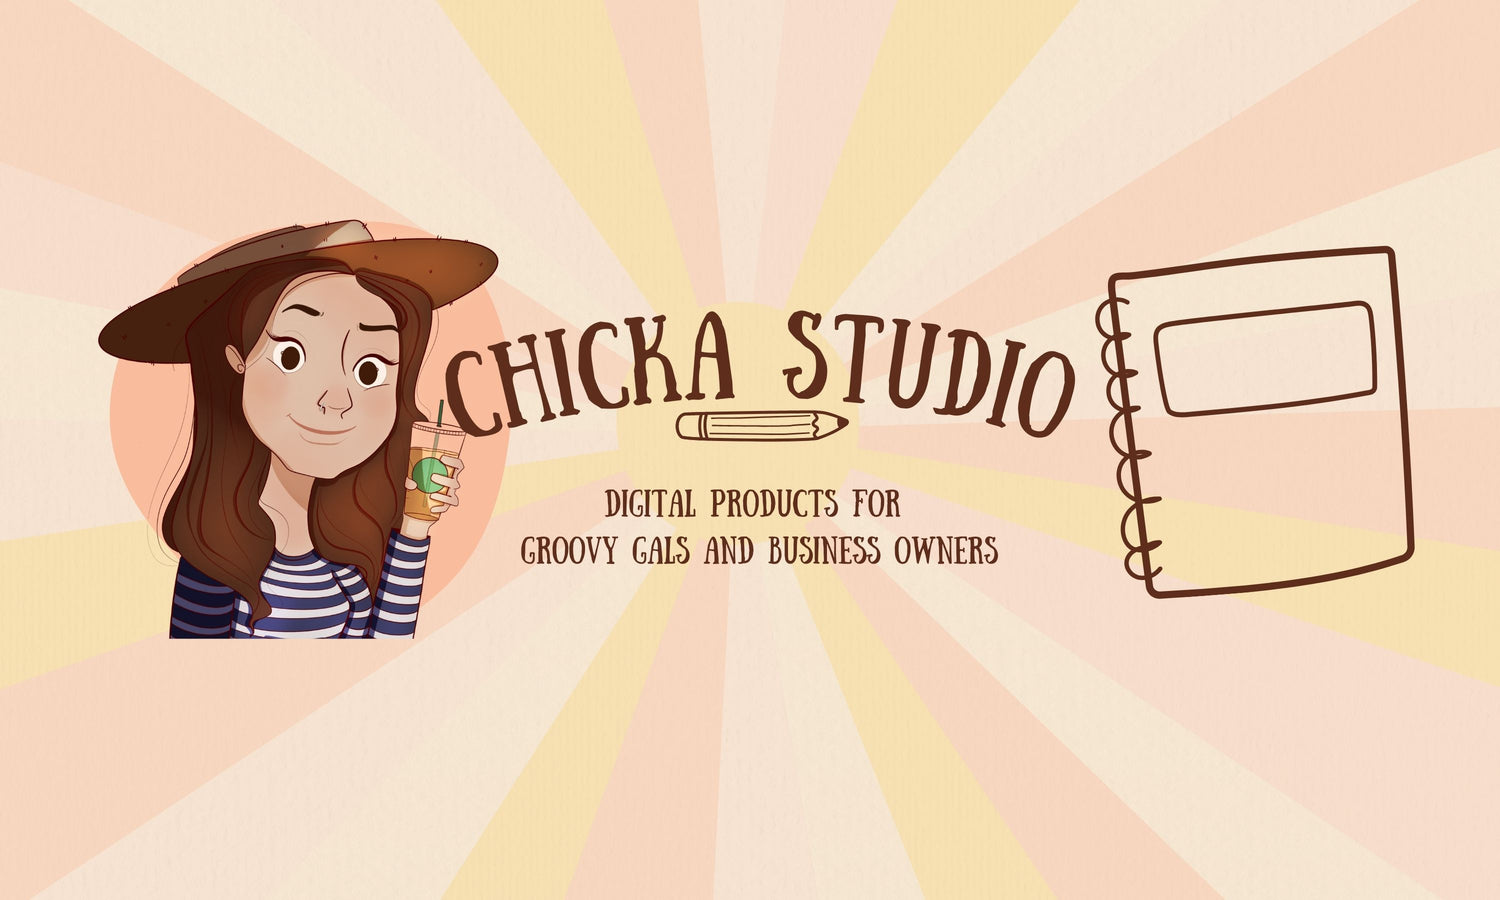 Chicka Studio